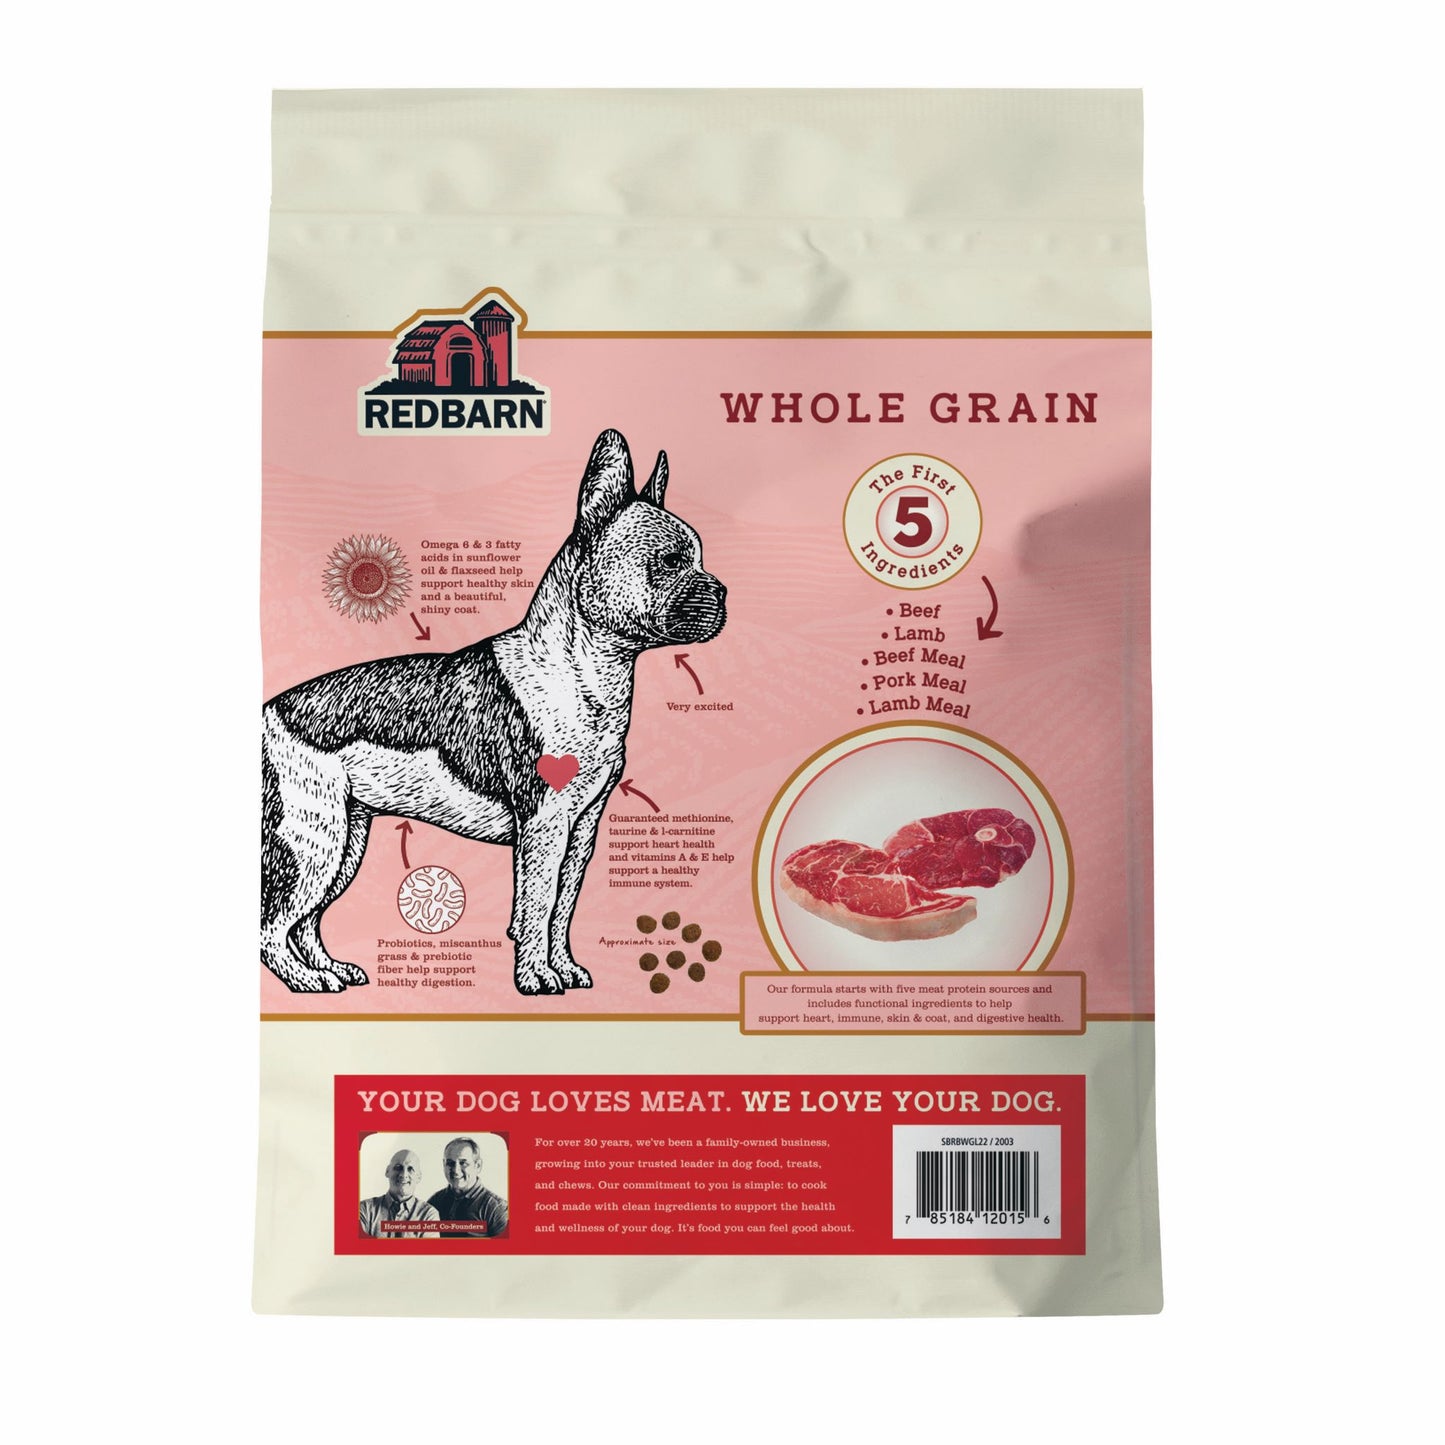 Redbarn Whole Grains Land Recipe, Dry Dog food